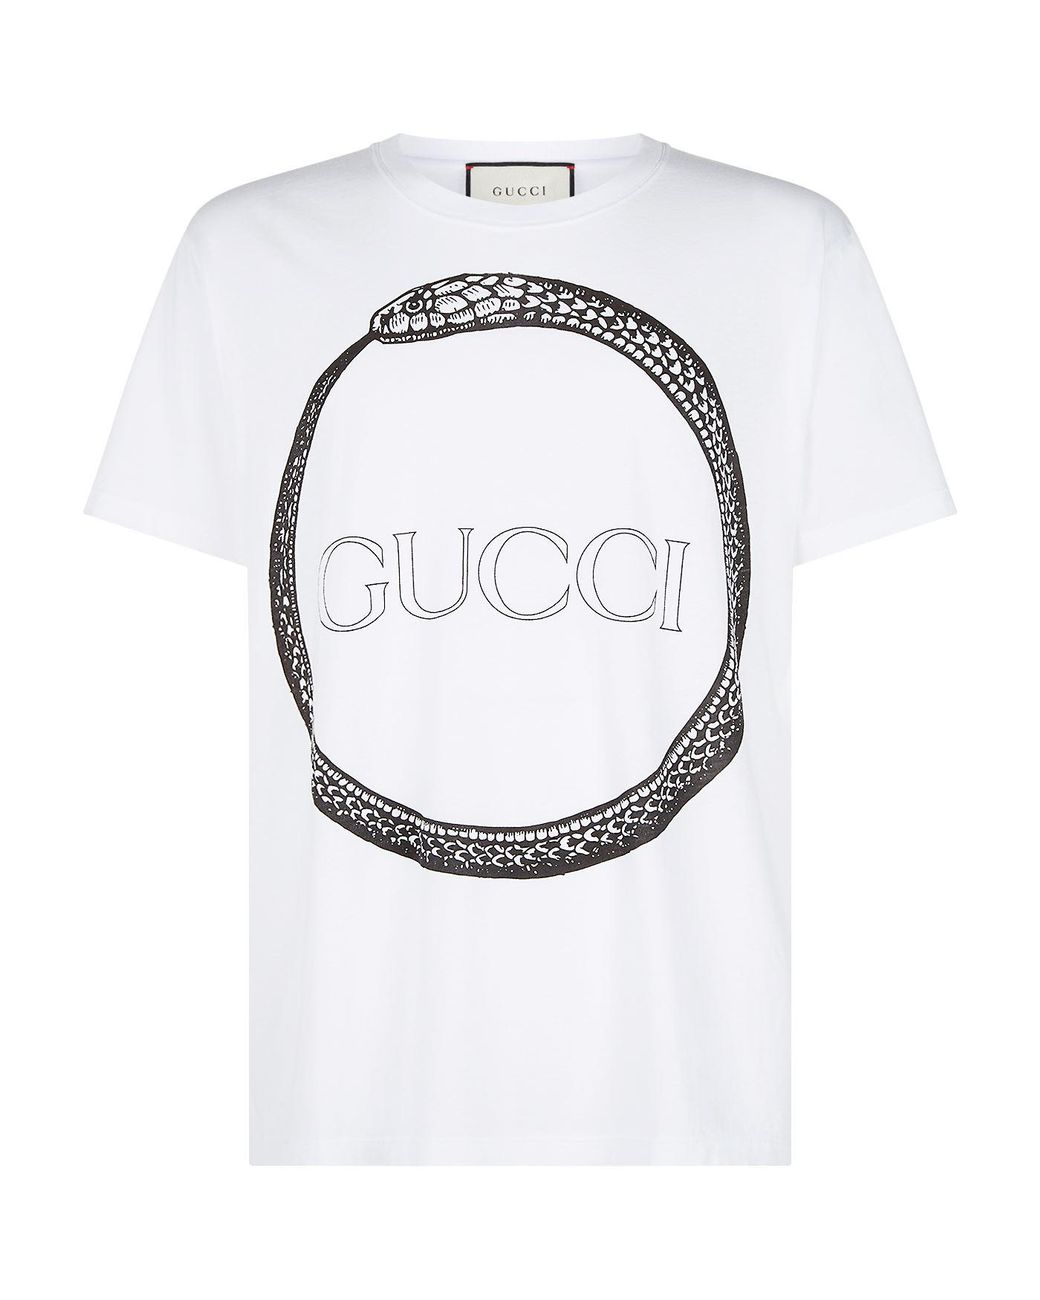 Gucci Snake Ring T-shirt in White for Men | Lyst